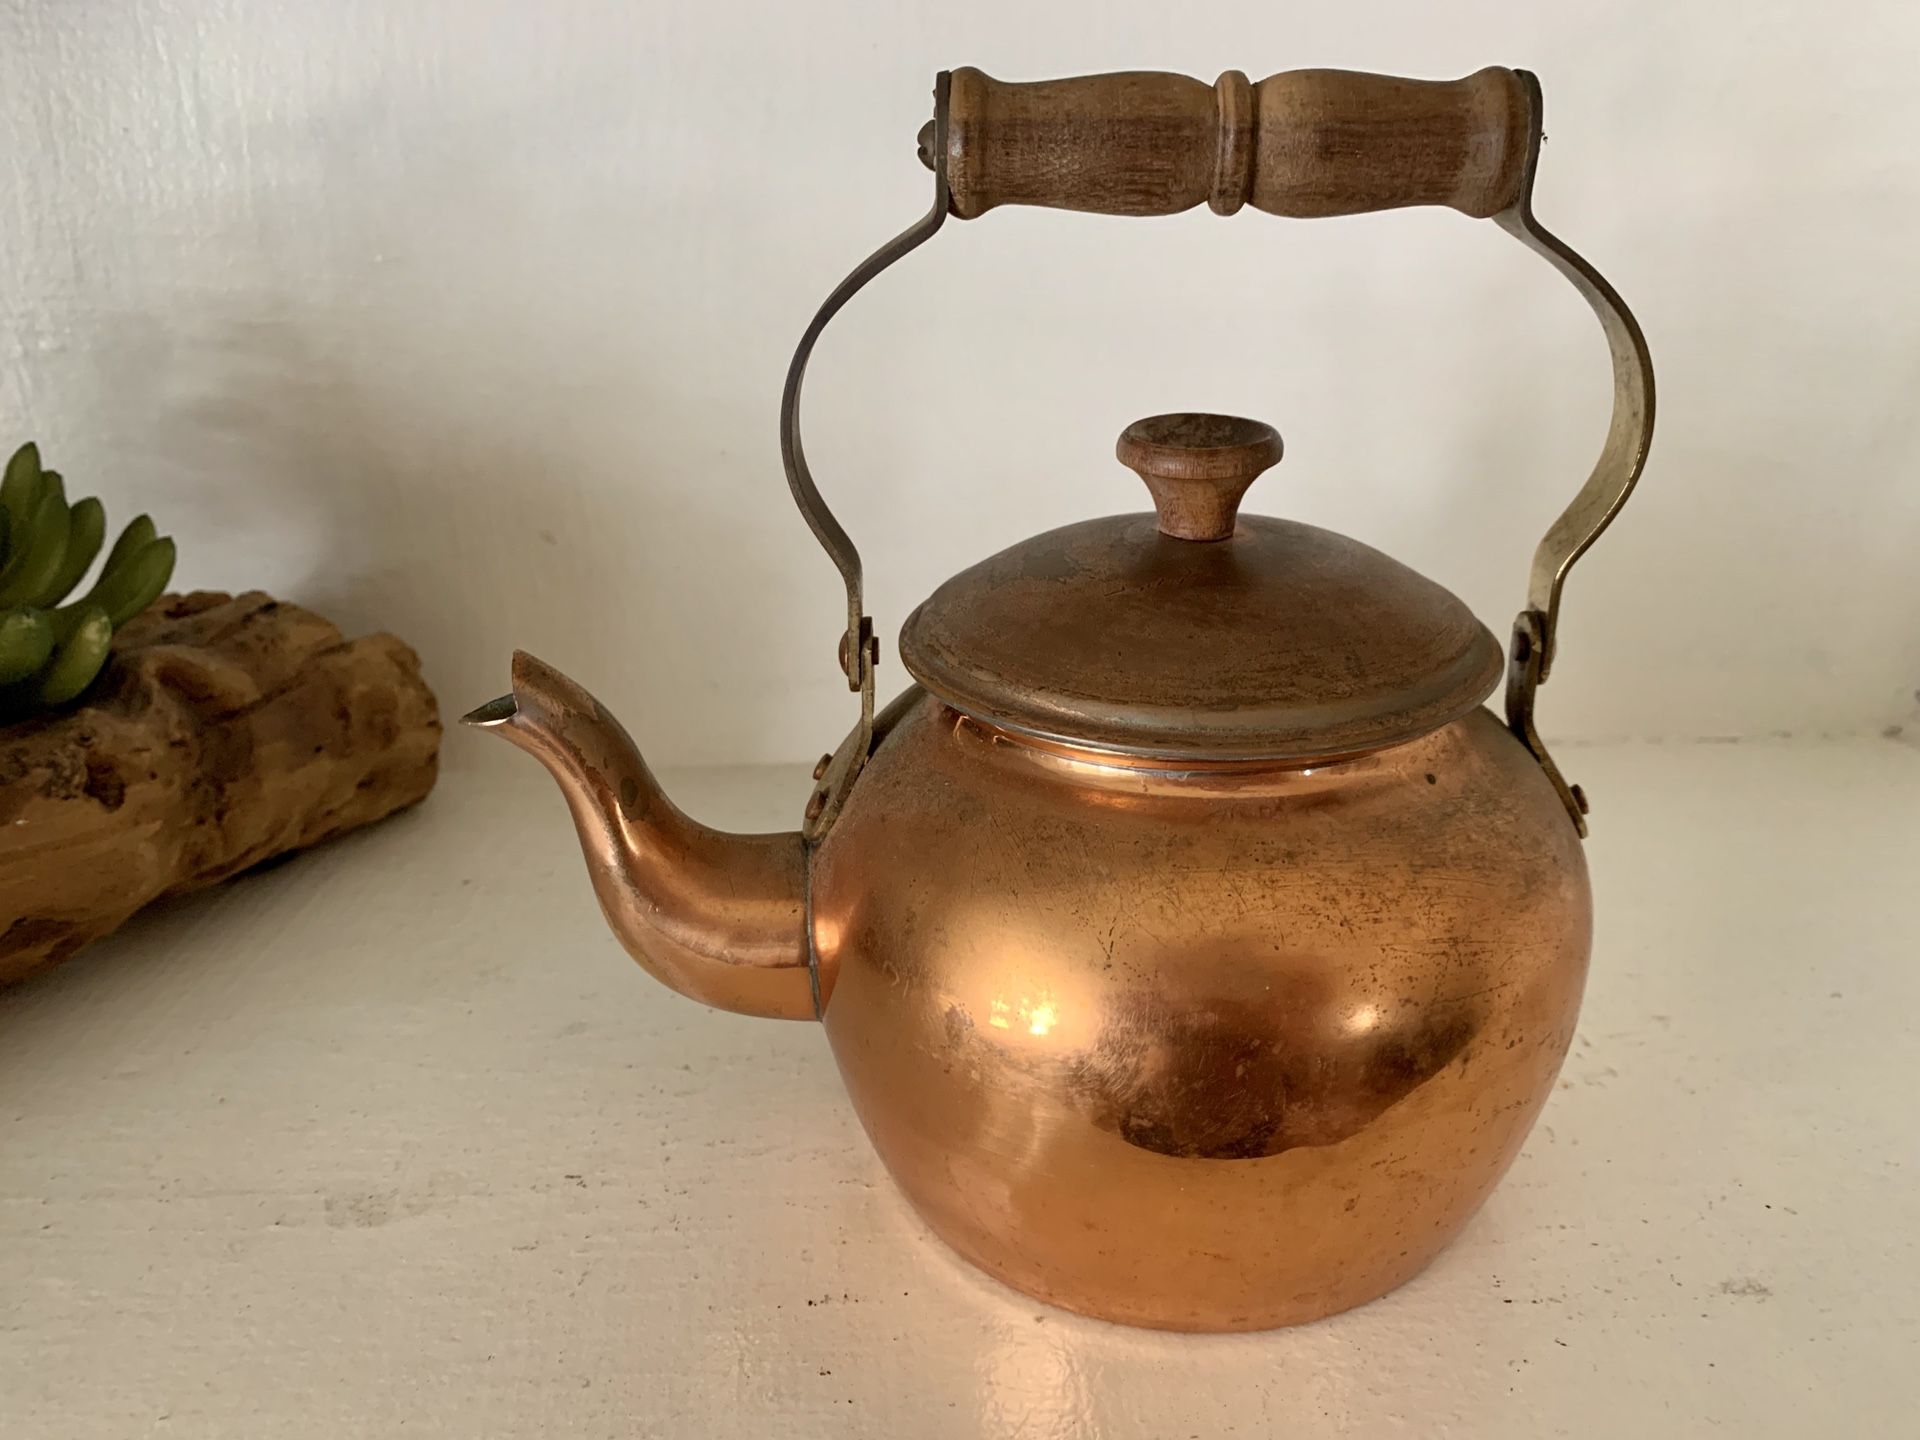 Antique copper tea kettle with wood handle